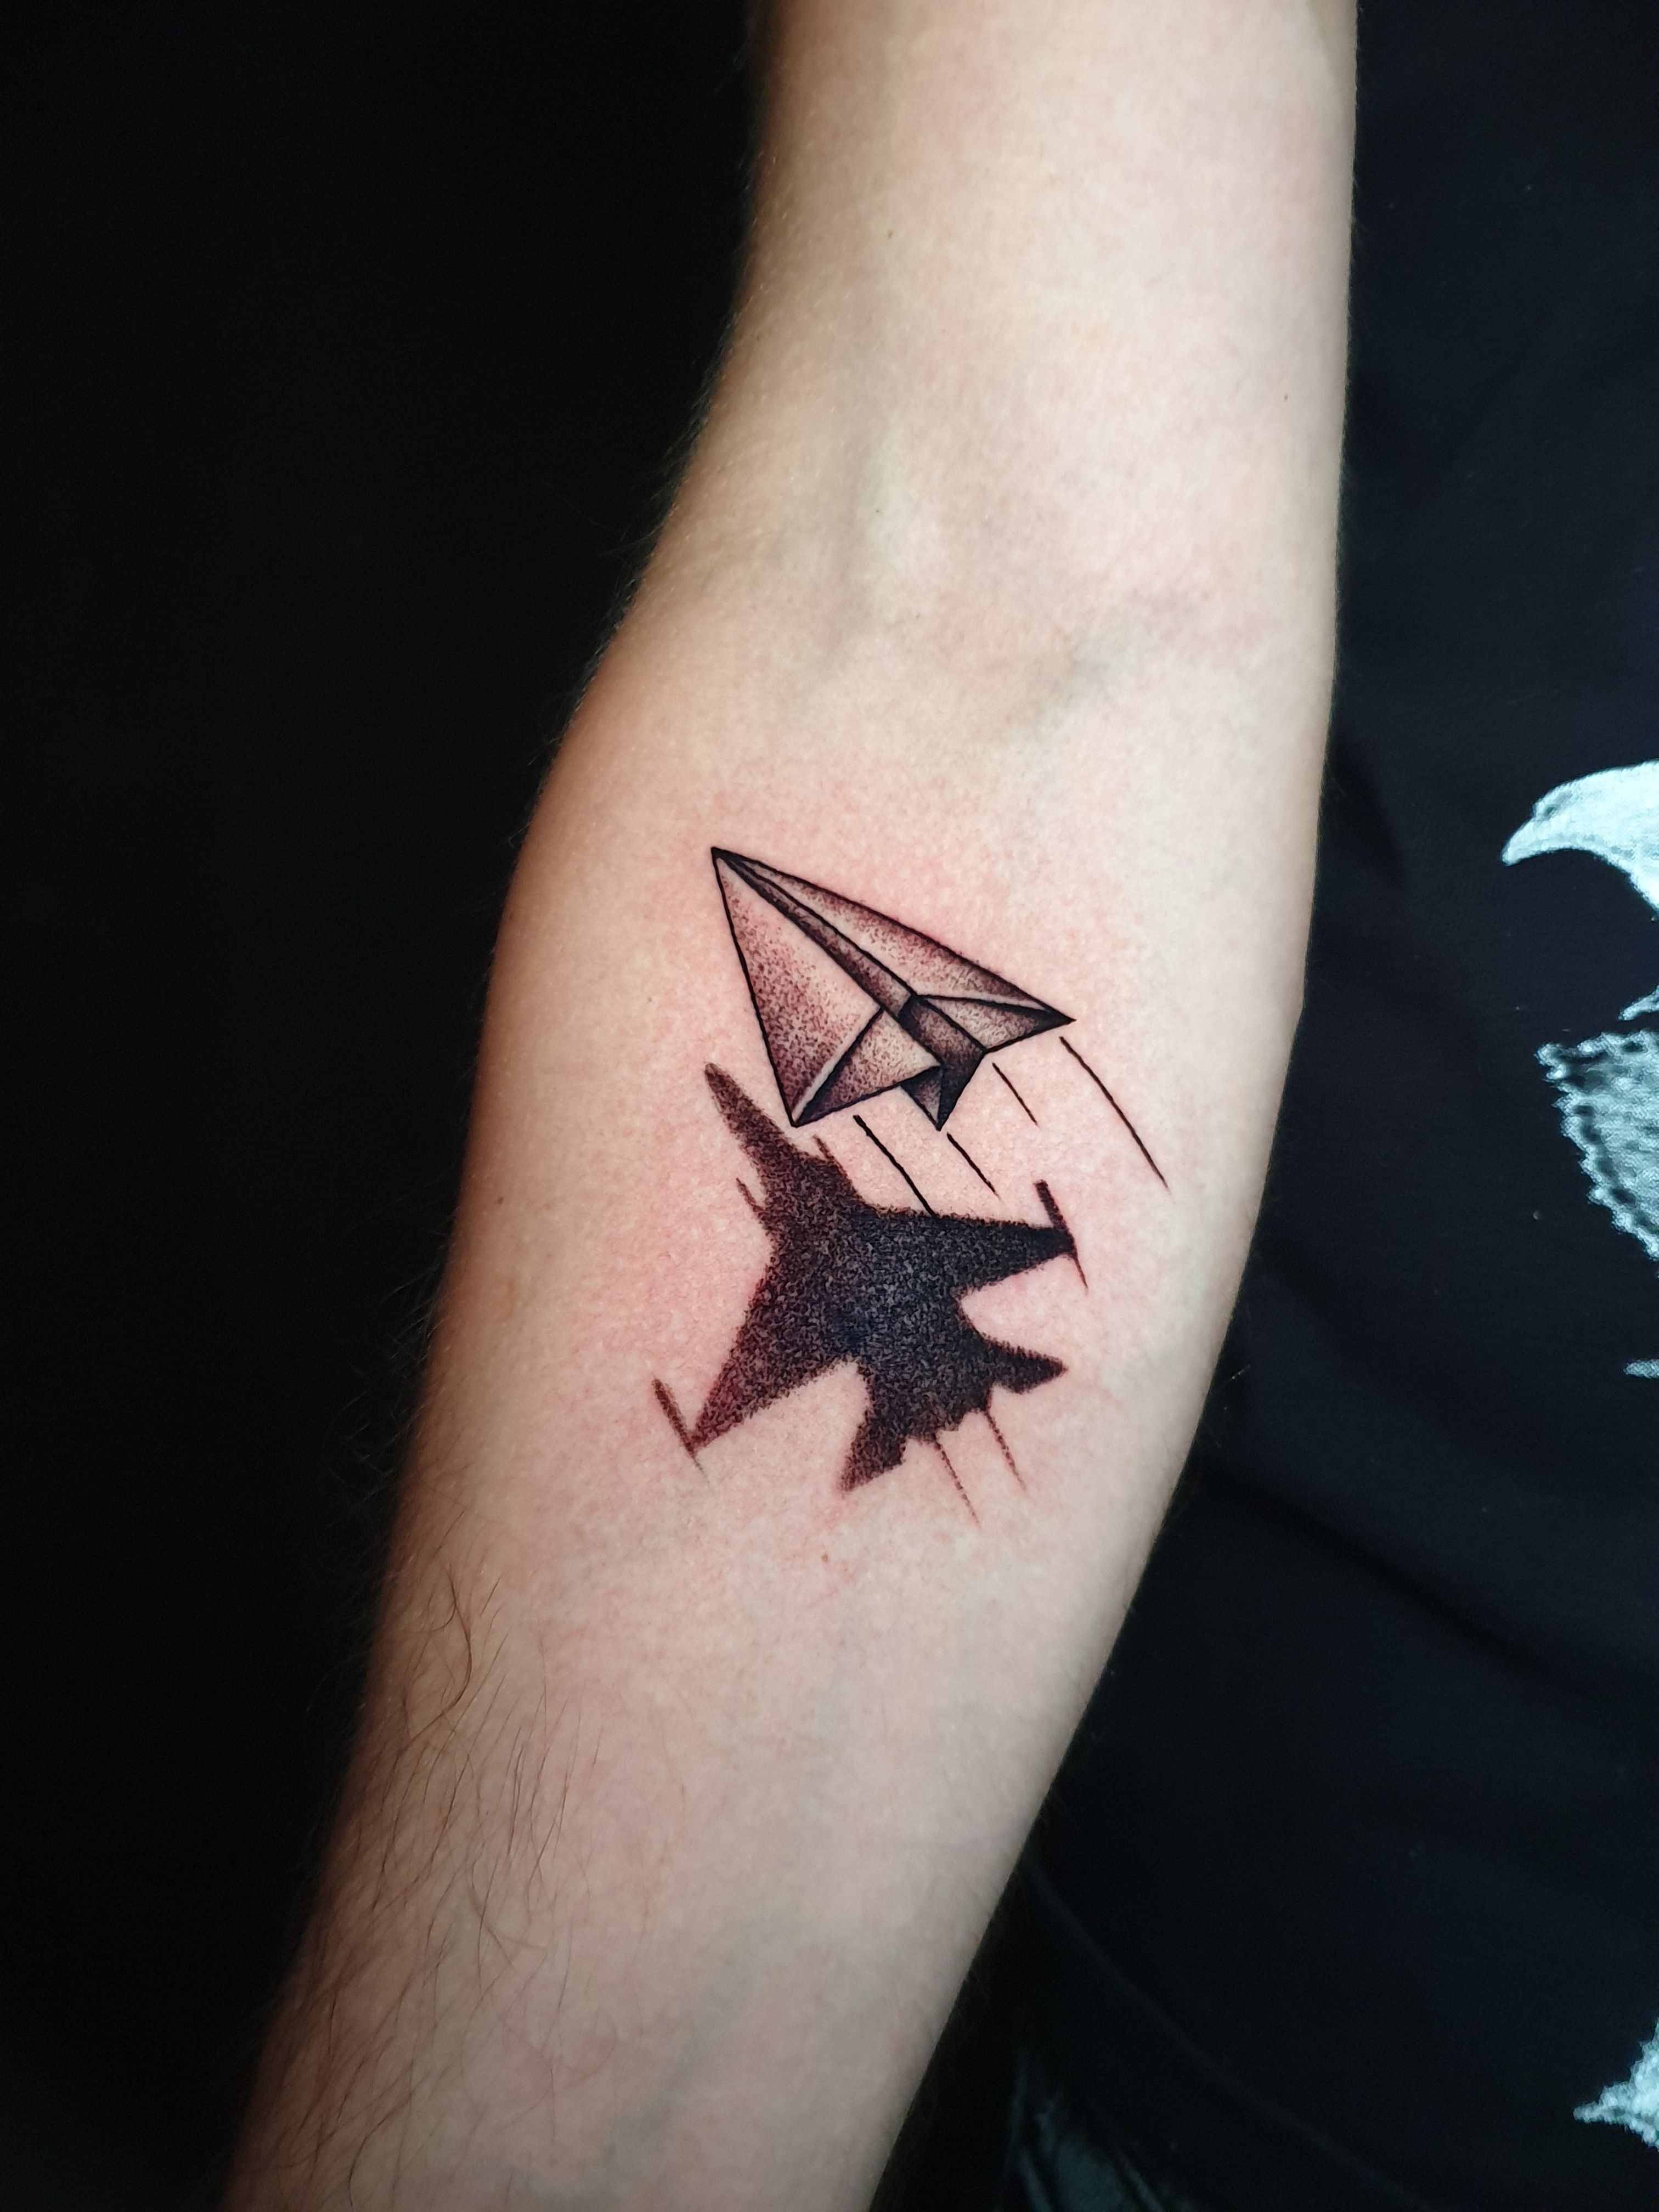 Matching paper plane tattoos - Tattoogrid.net | Plane tattoo, Paper plane  tattoo, Tattoos